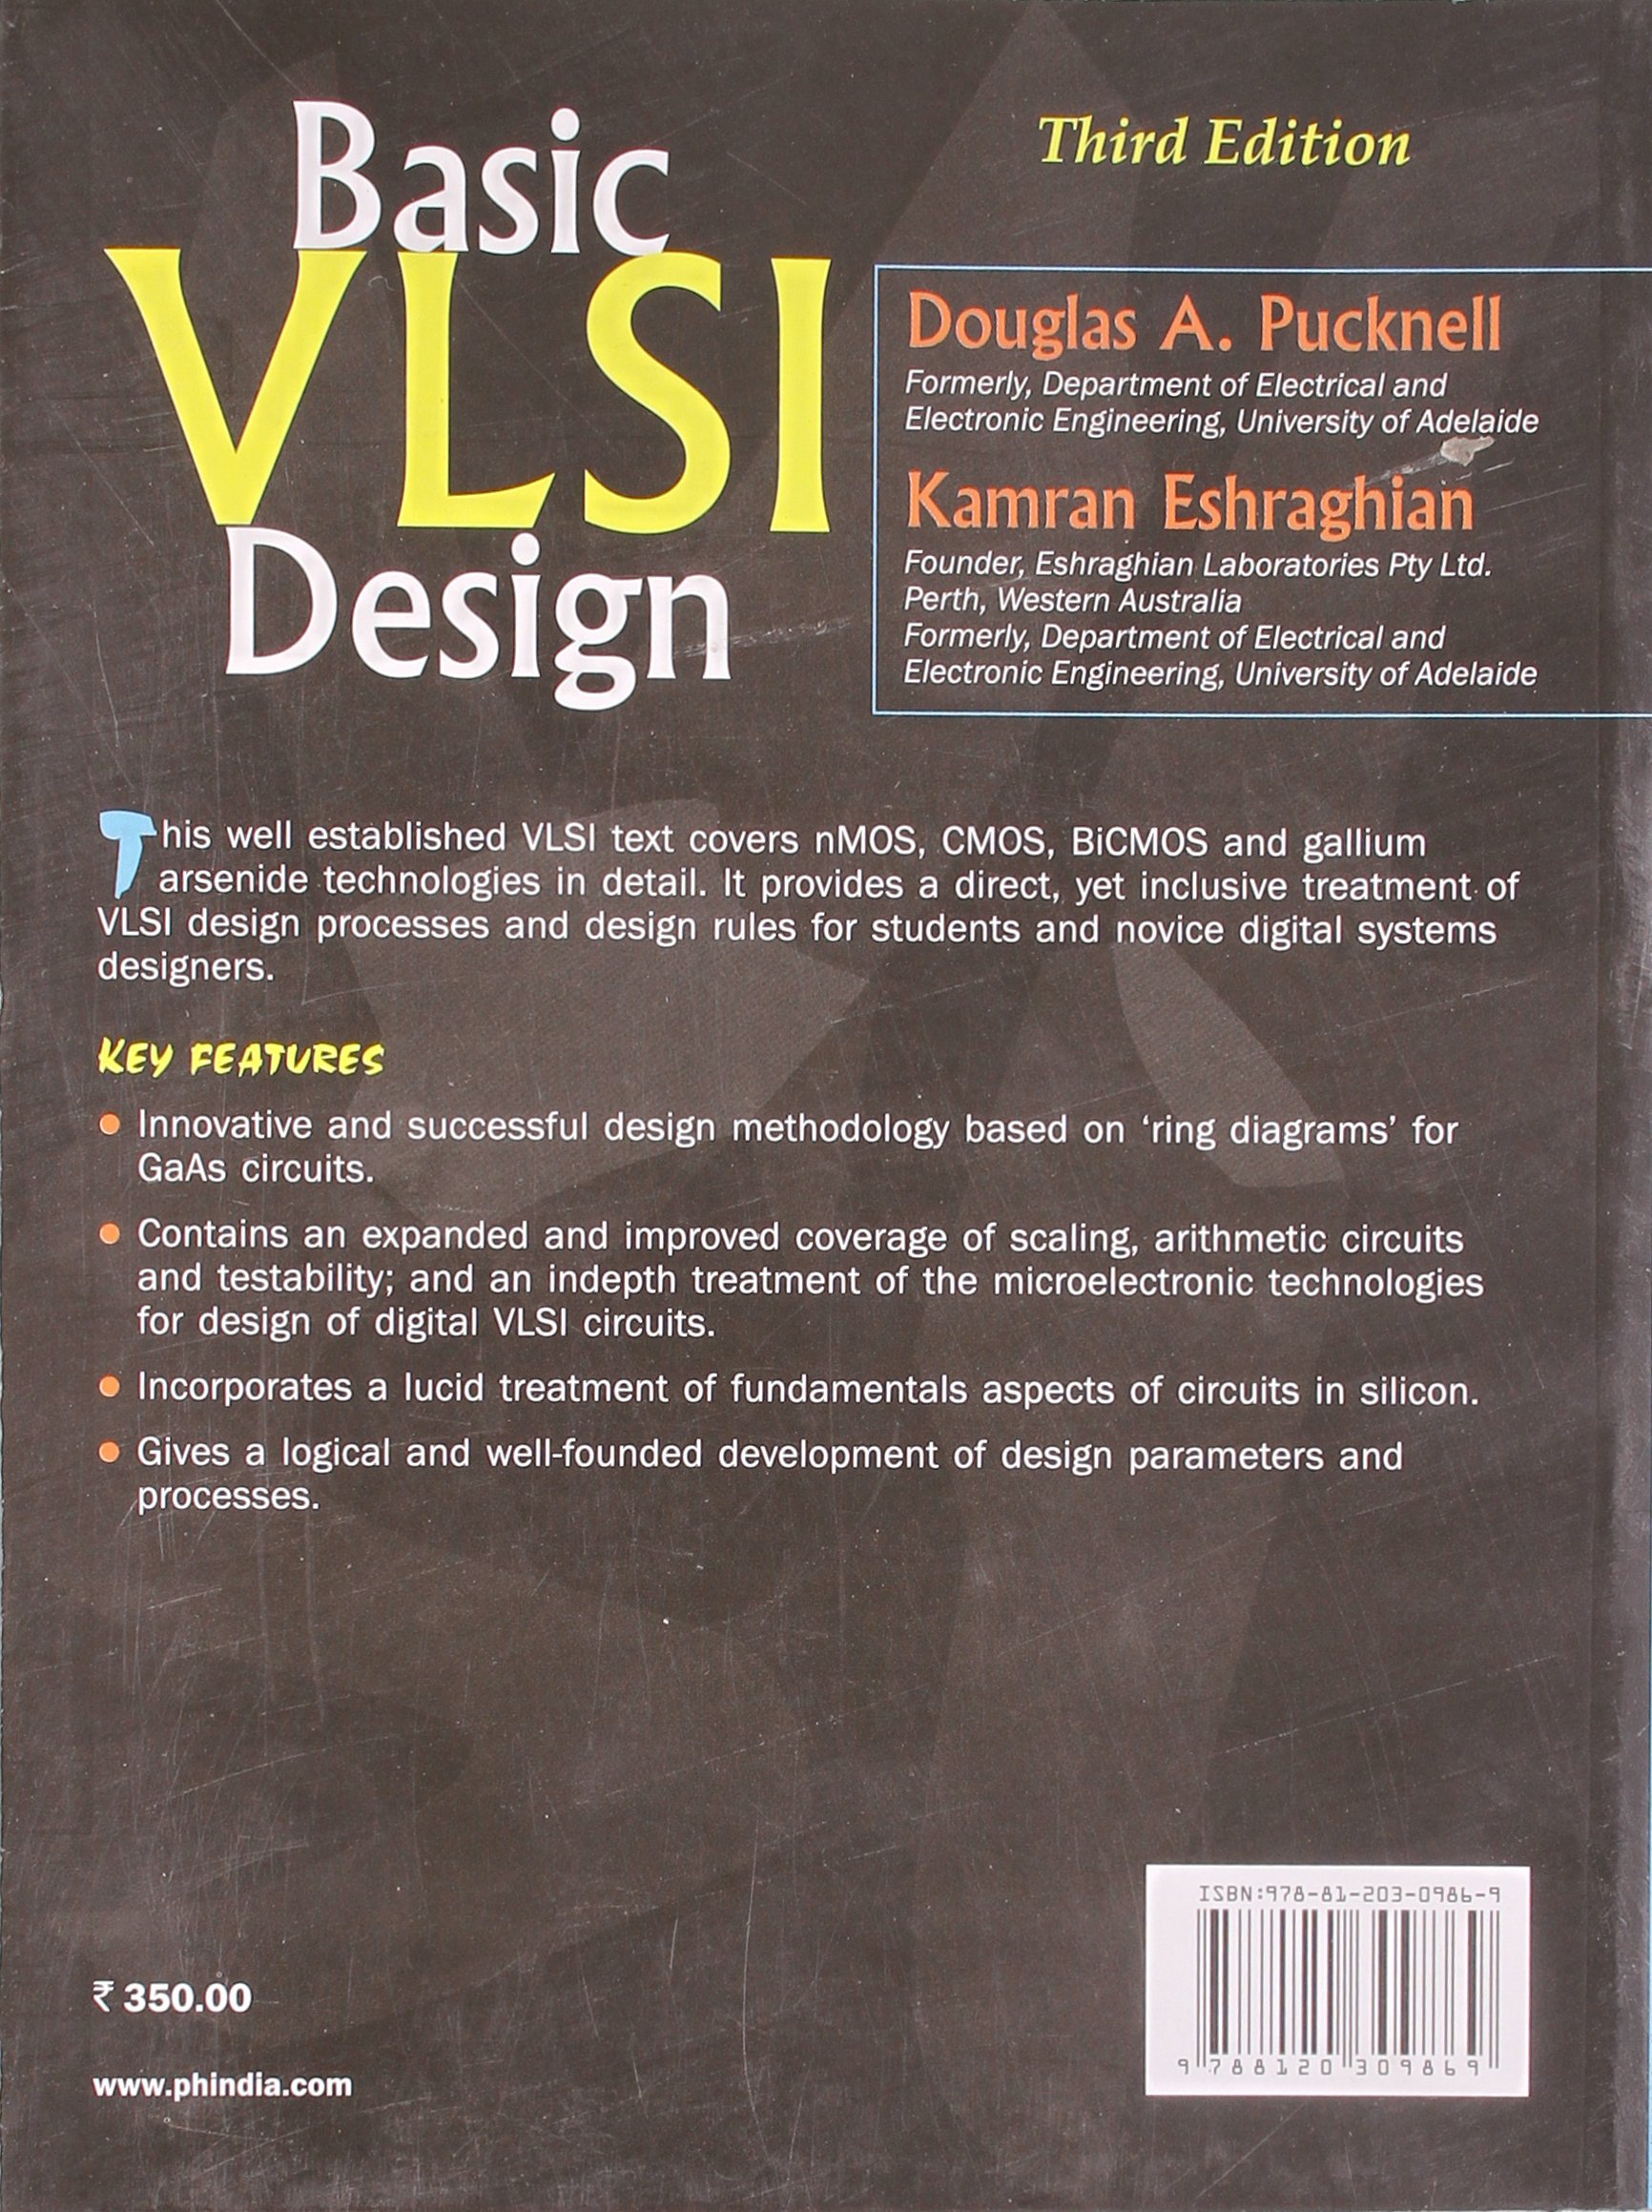 Basic Vlsi Design By Pucknell 3rd Edition Pdf